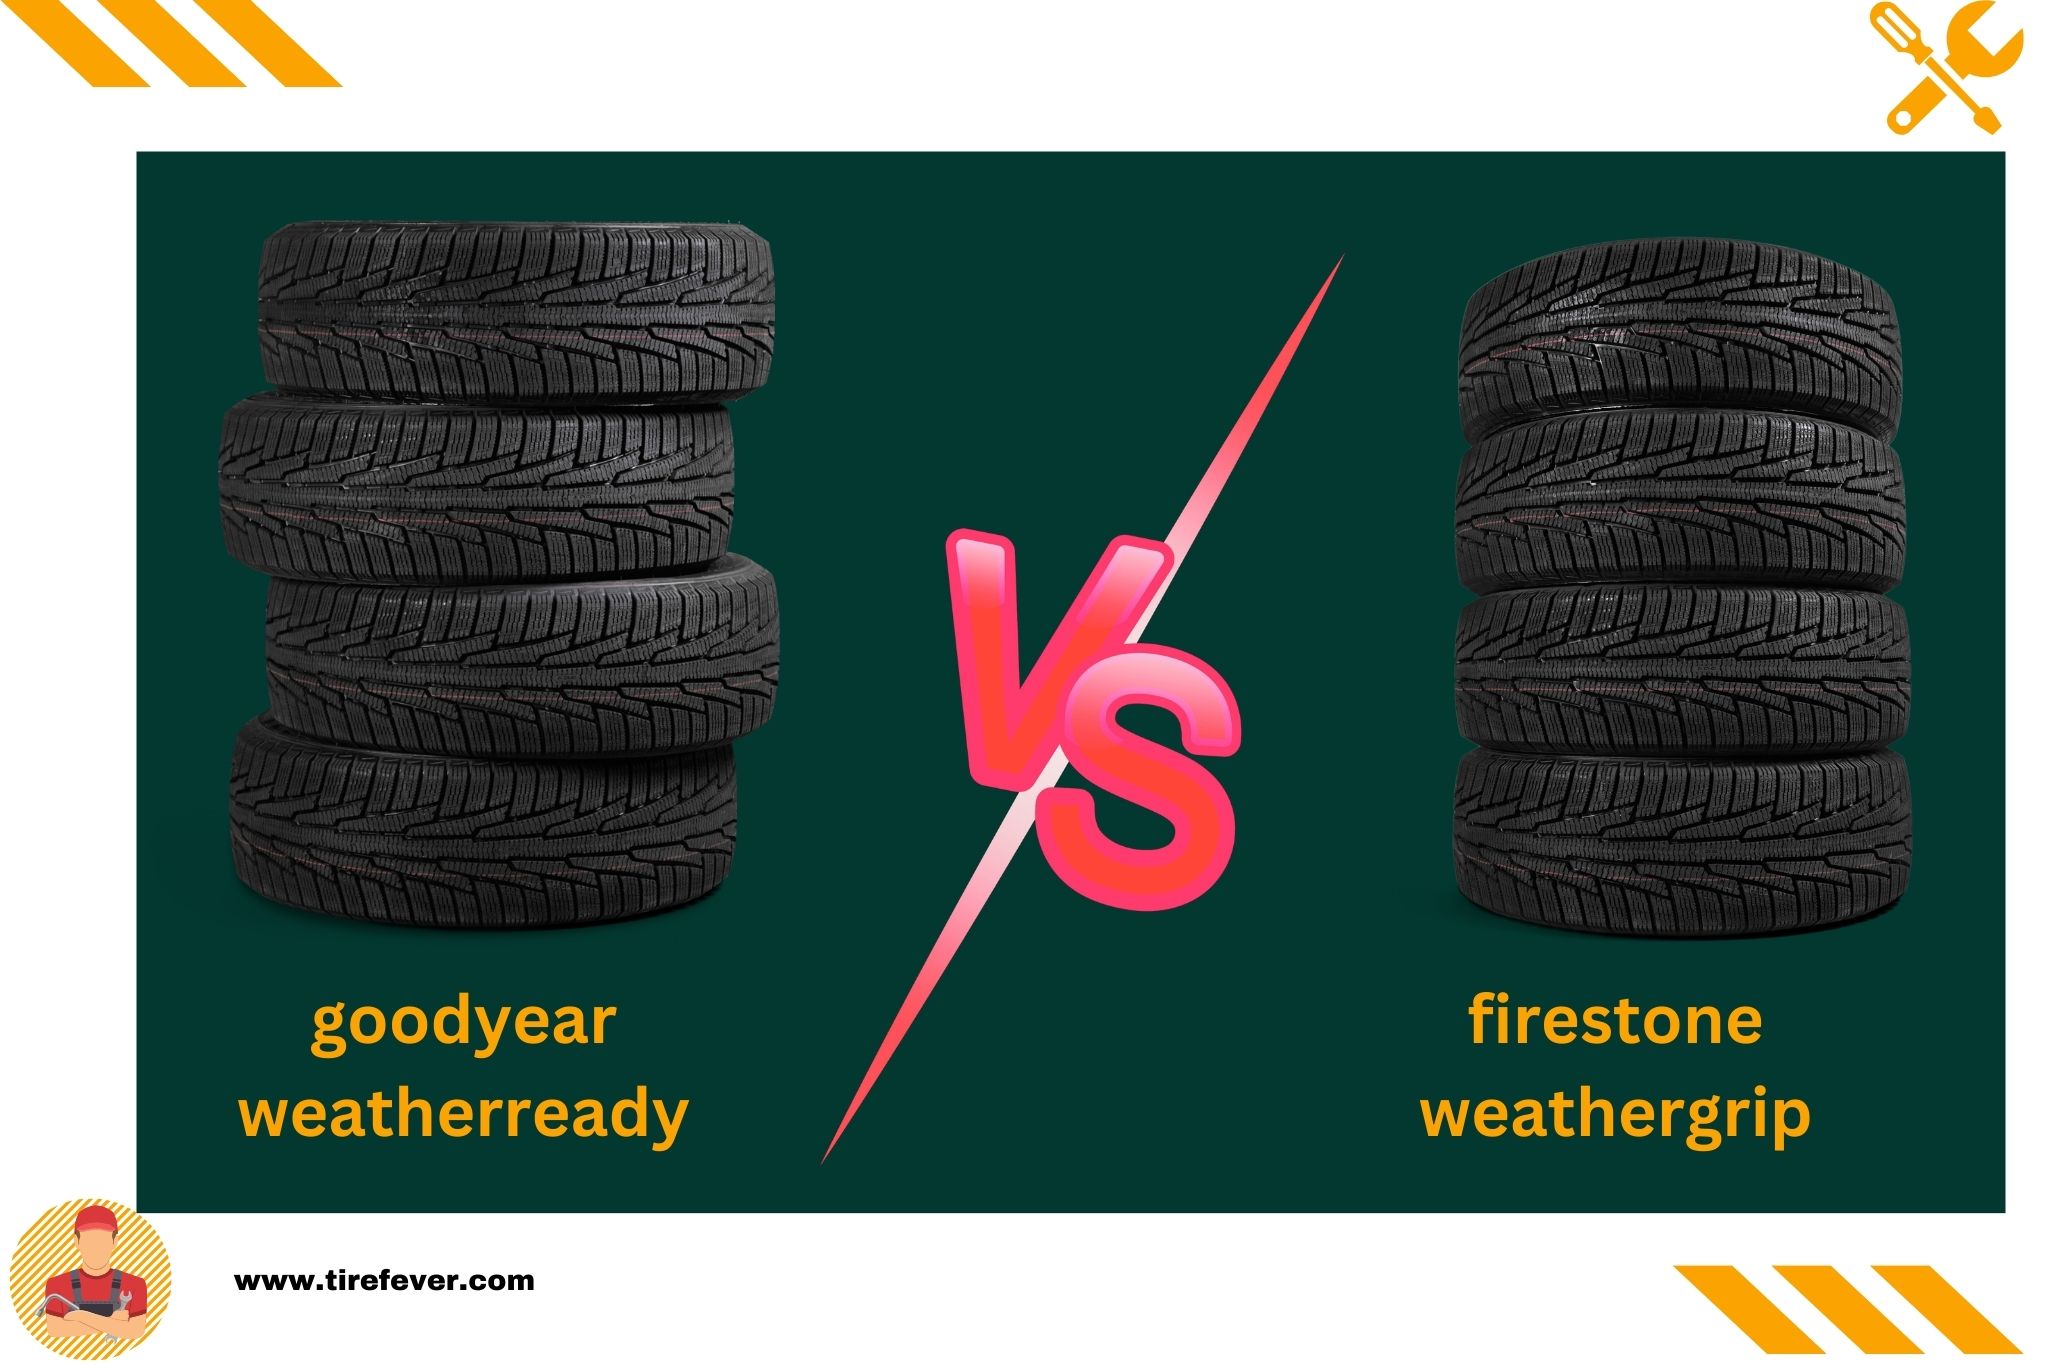 goodyear weatherready vs firestone weathergrip